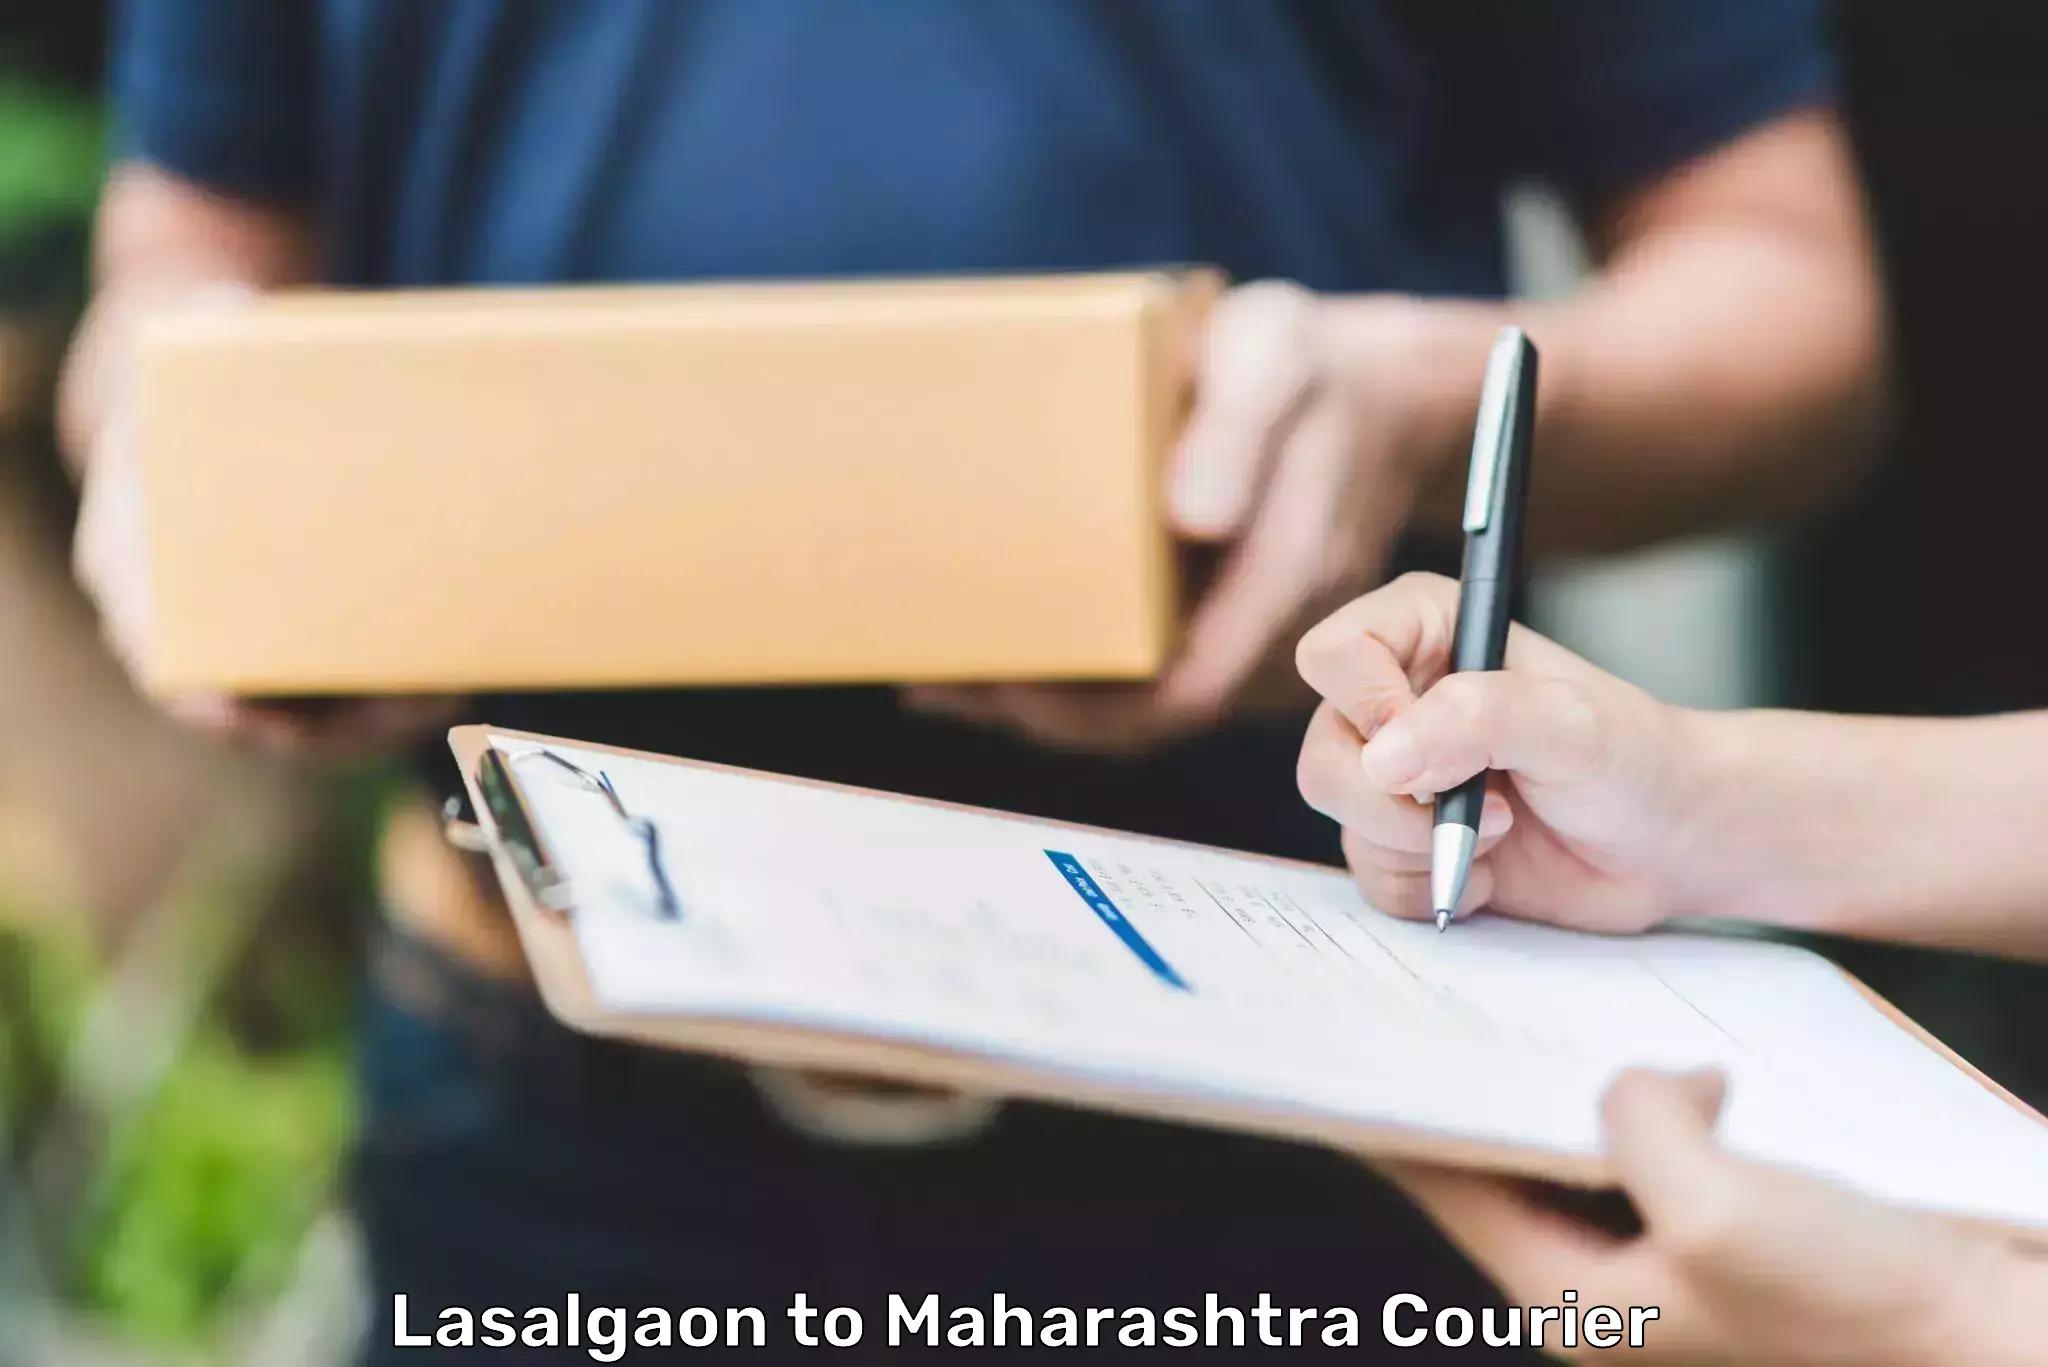 Courier service comparison Lasalgaon to Pandharkawada